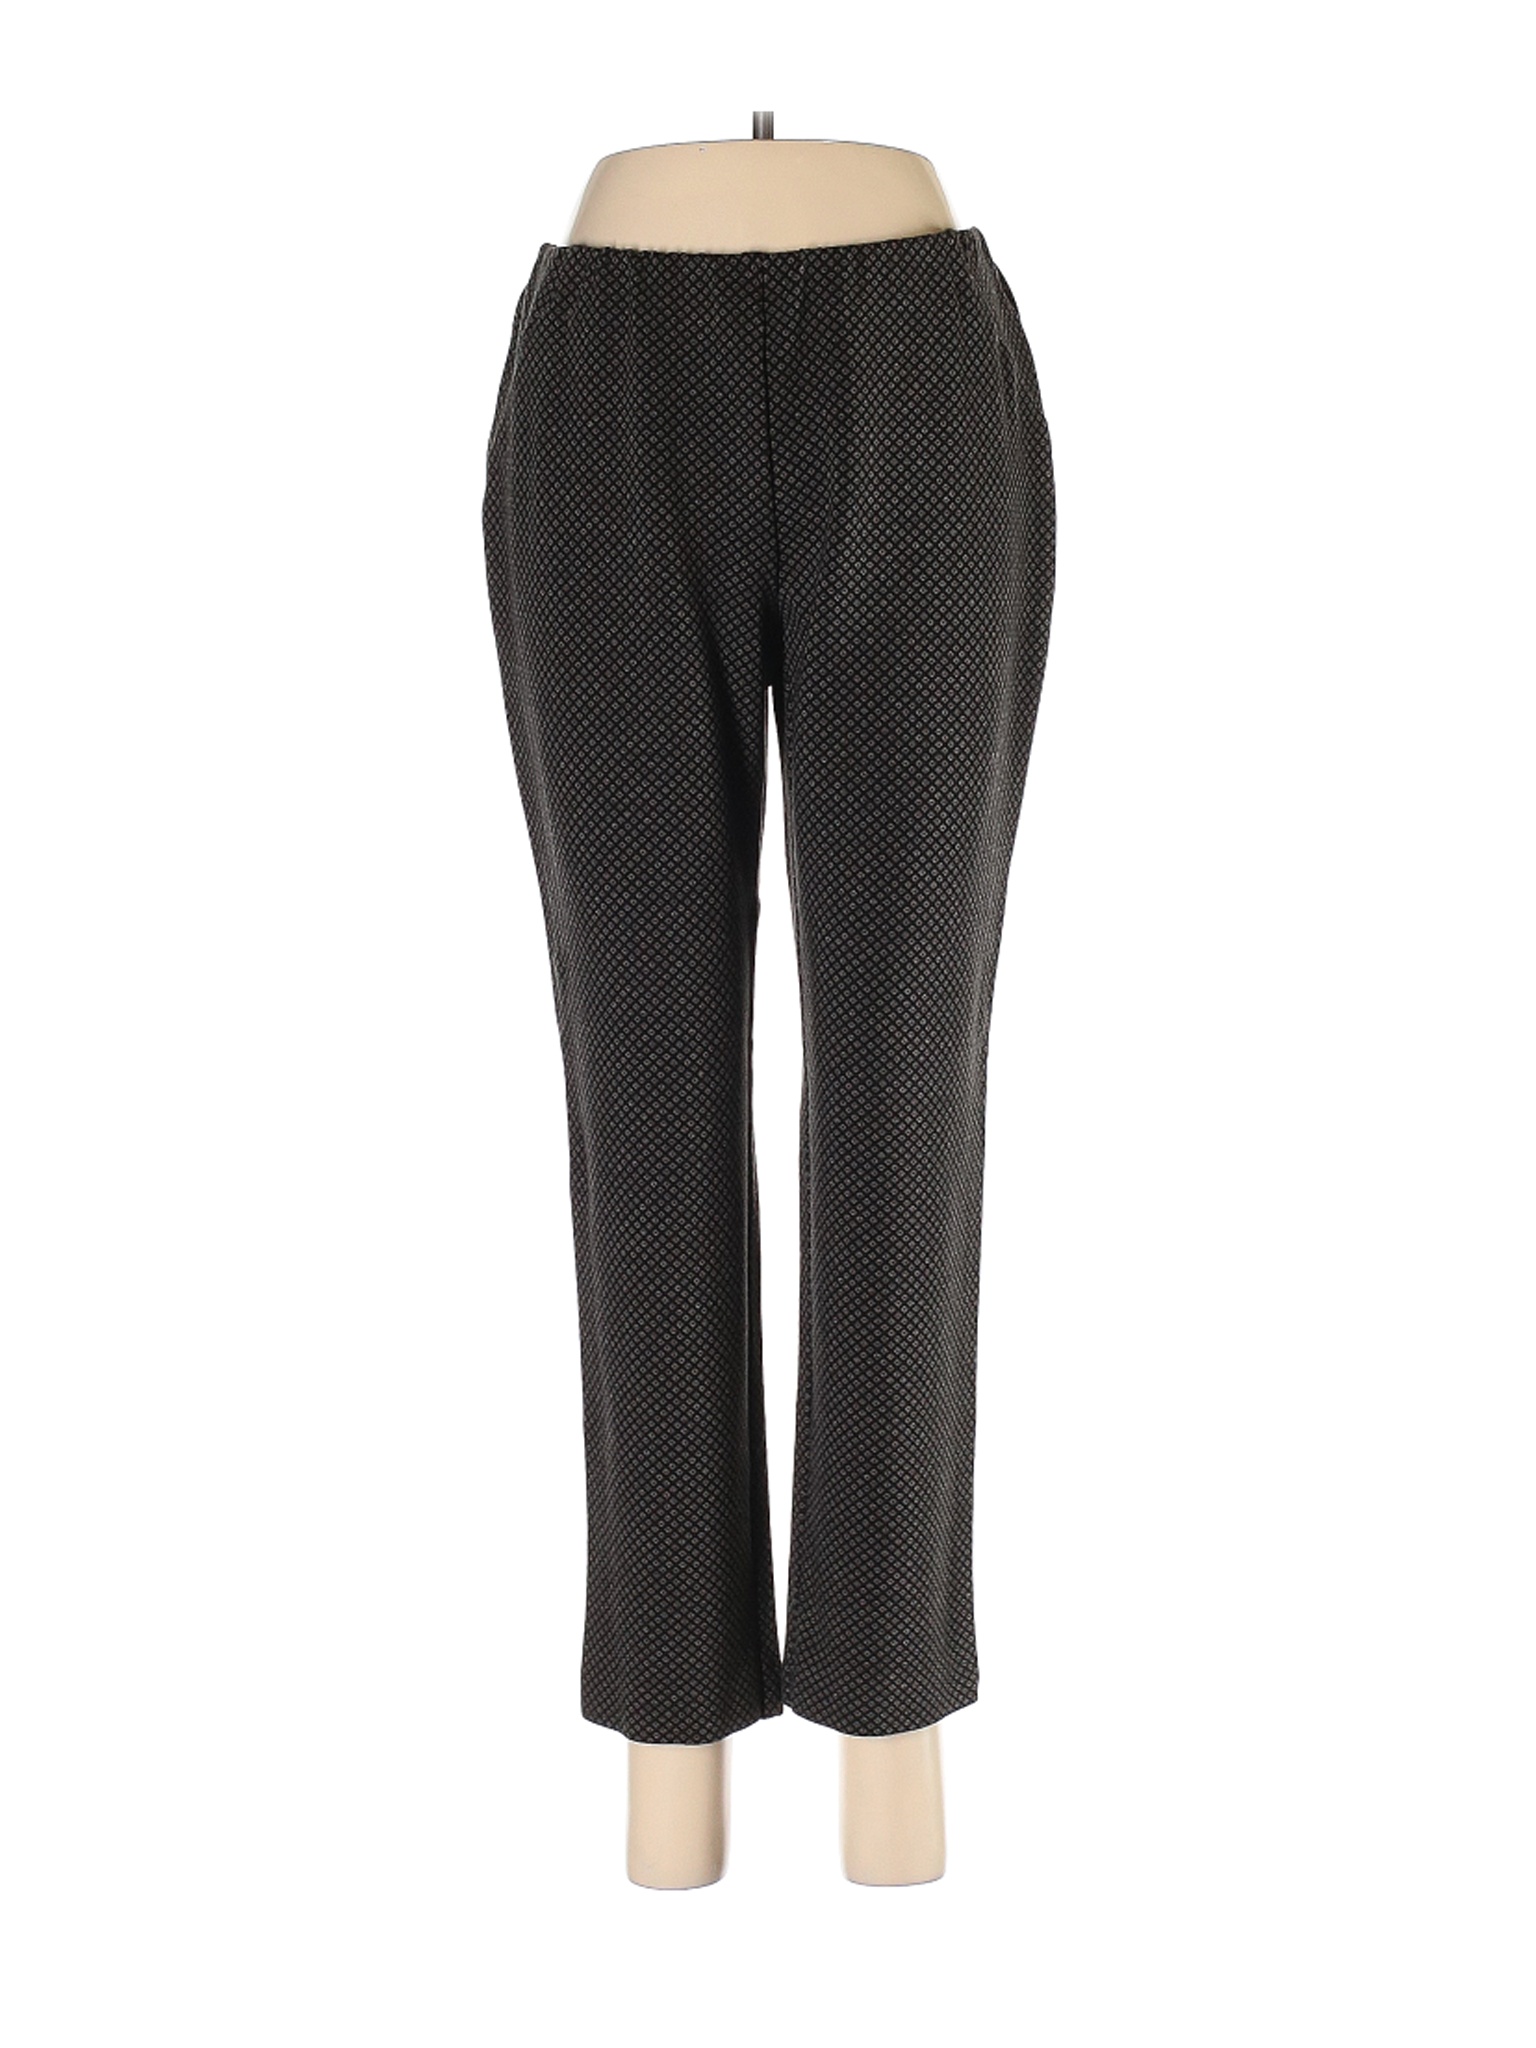 J.Jill Women Black Casual Pants S Petites | eBay